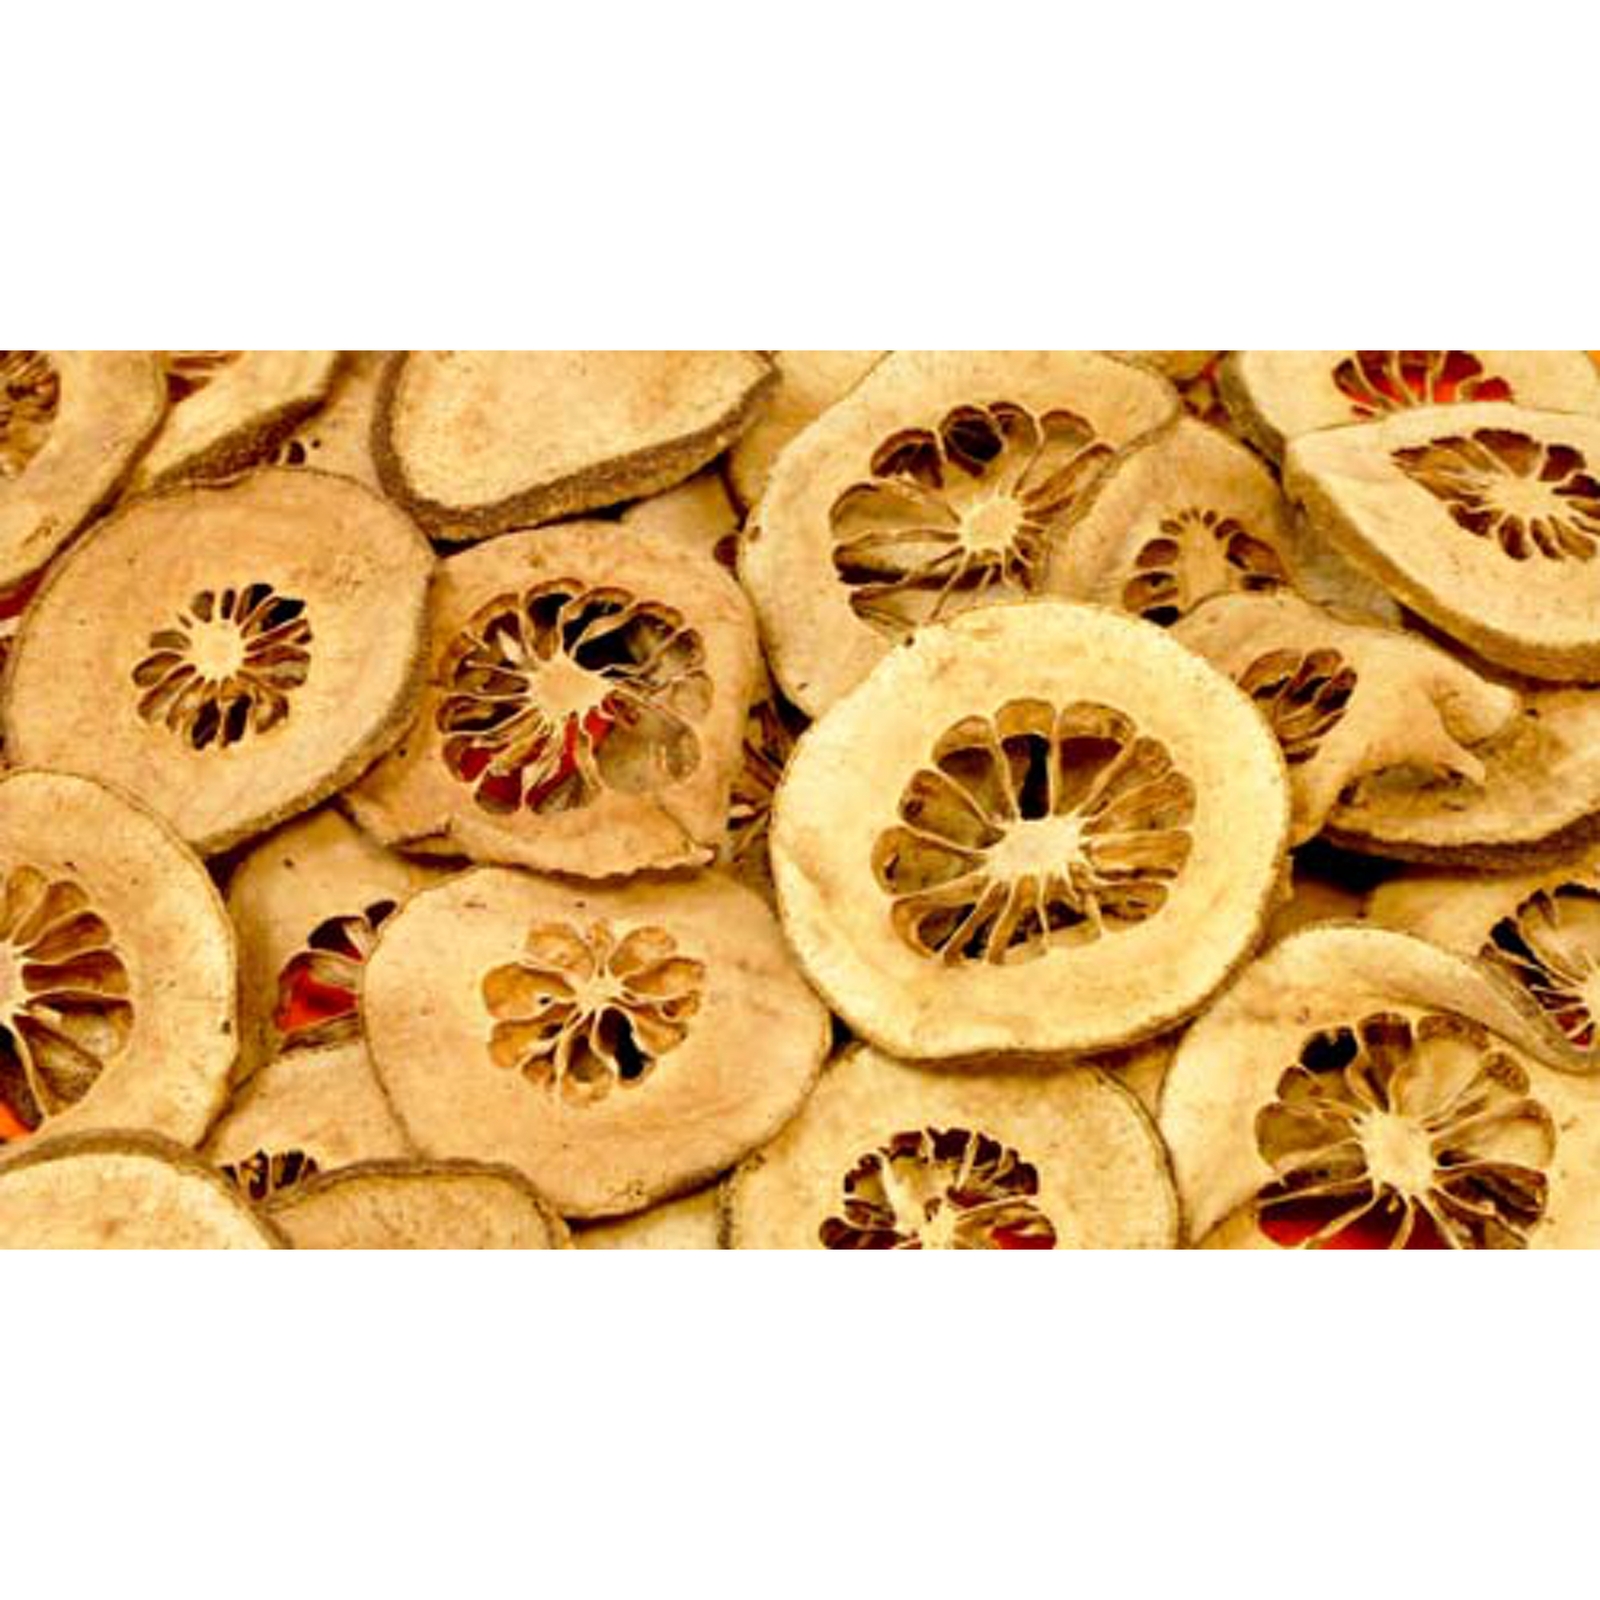 Fruit Slices - 250g